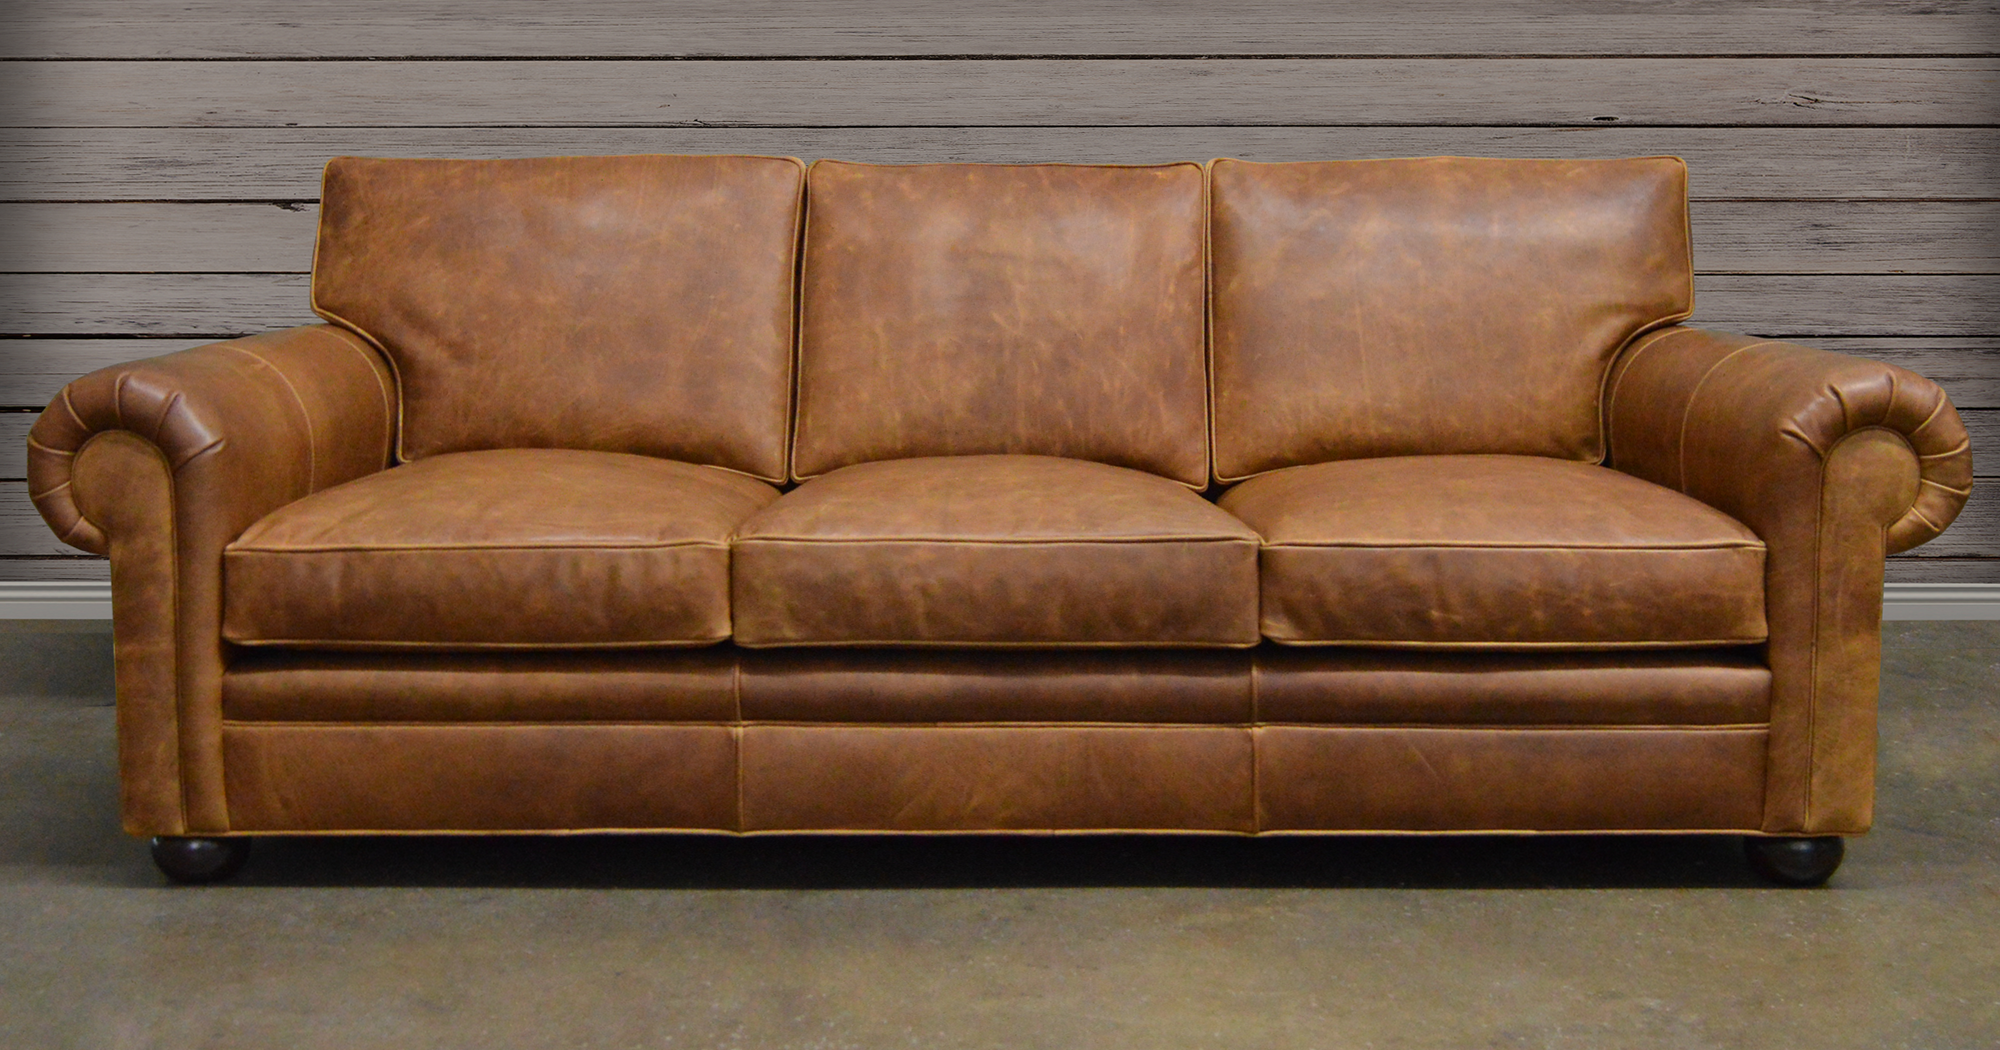 Langston Leather Sofa in Italian Brentwood Tan Leather